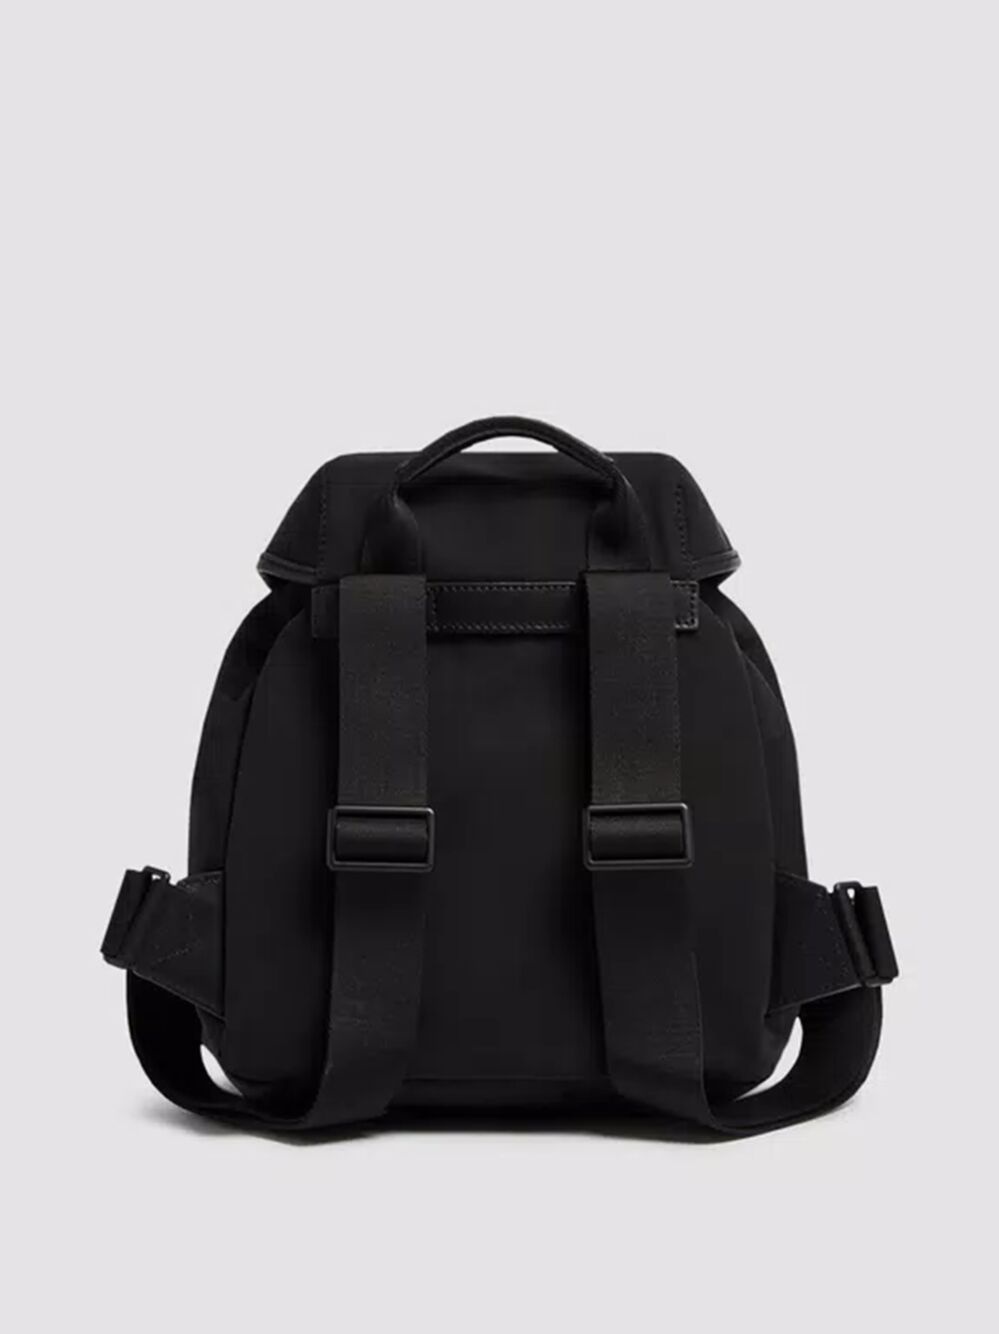 Trick backpack - 4